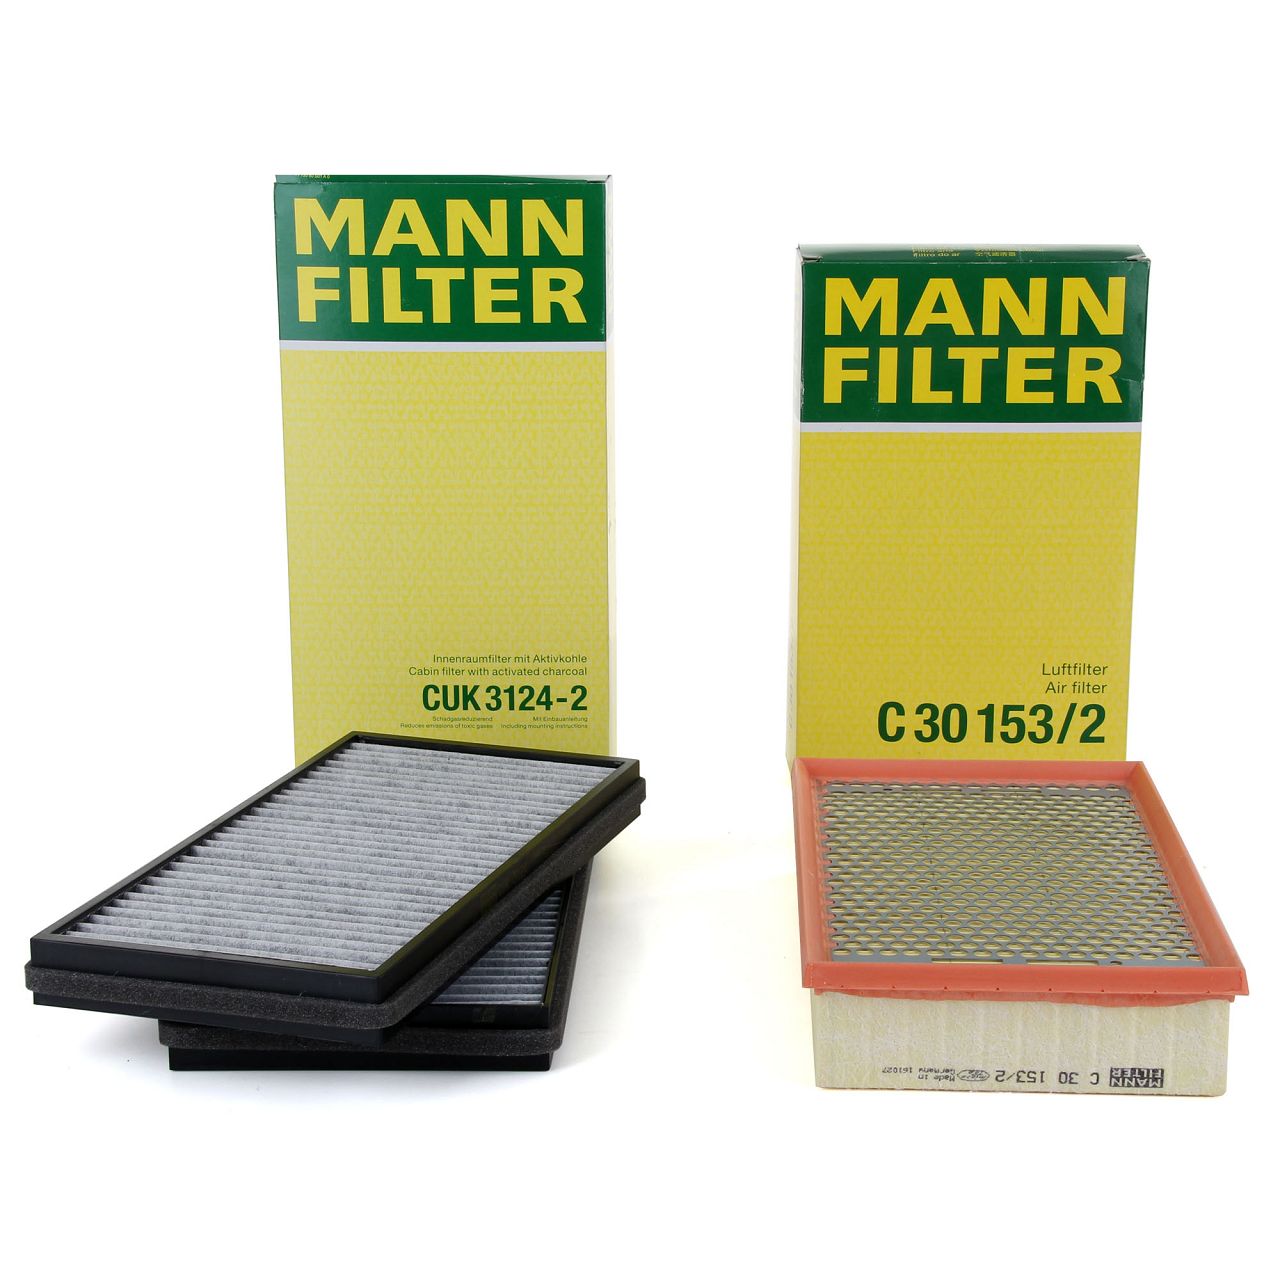 MANN Filter-Set BMW 7er E65 E66 E67 730i 730Li M54 231 PS